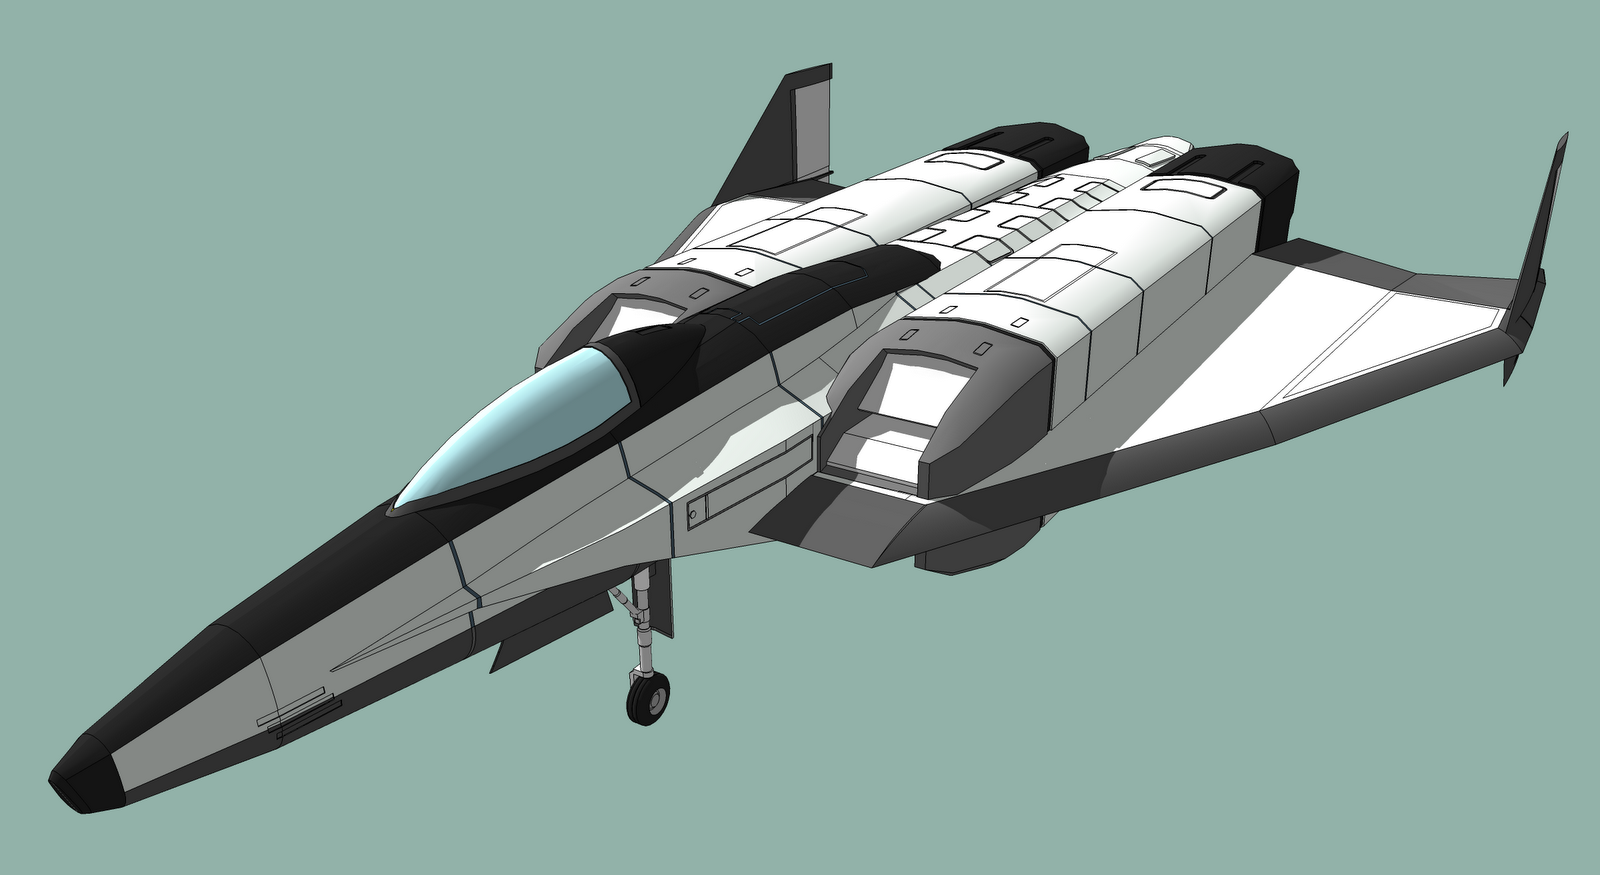 SketchUpでデジタルプラモ: 宇宙空母ブルーノア ”艦載戦闘機”製作